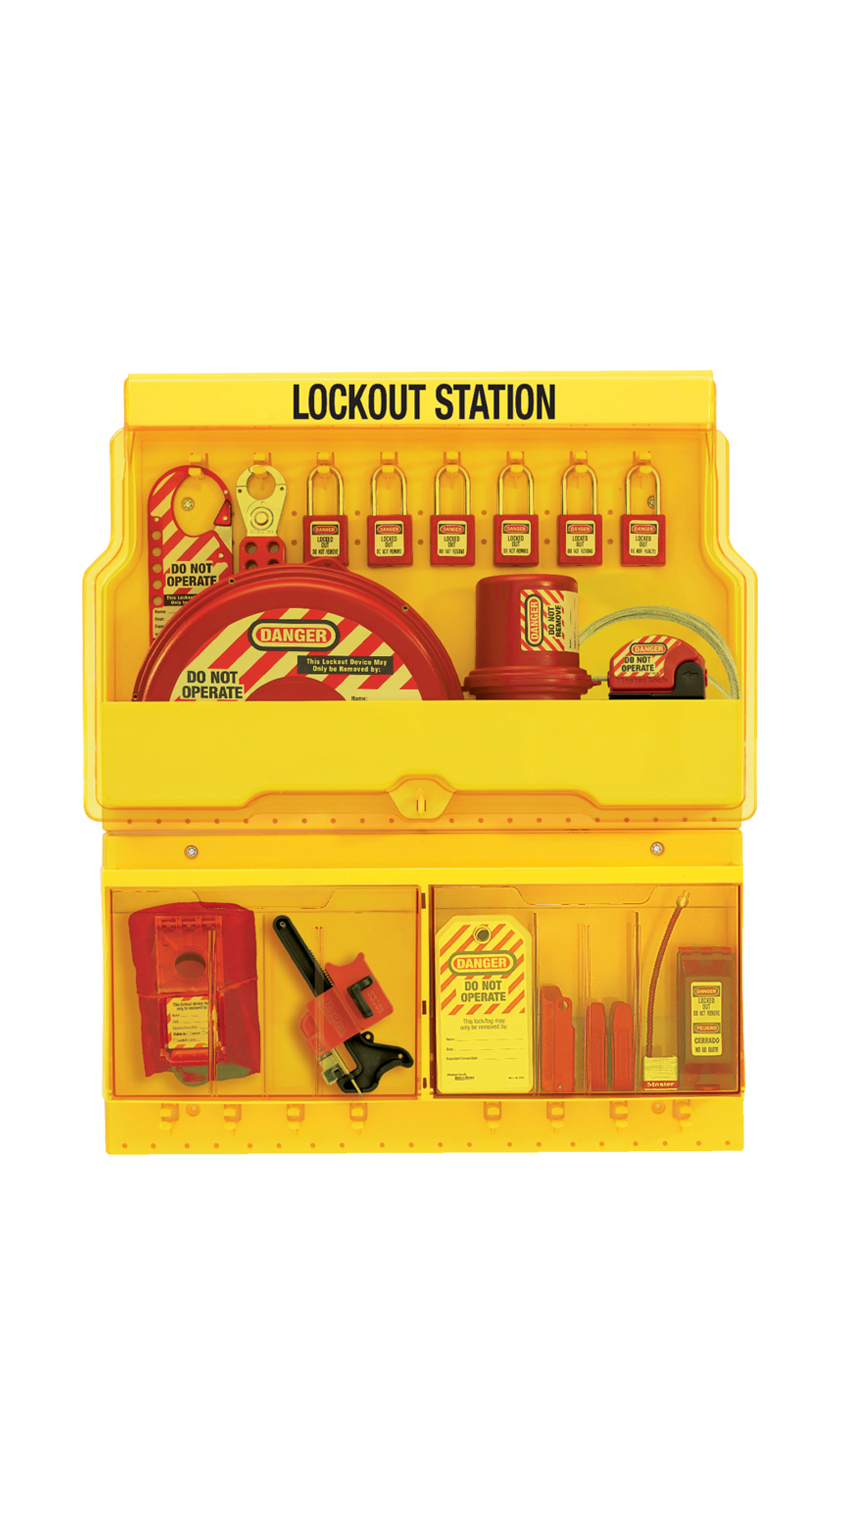 lockout-tagout station